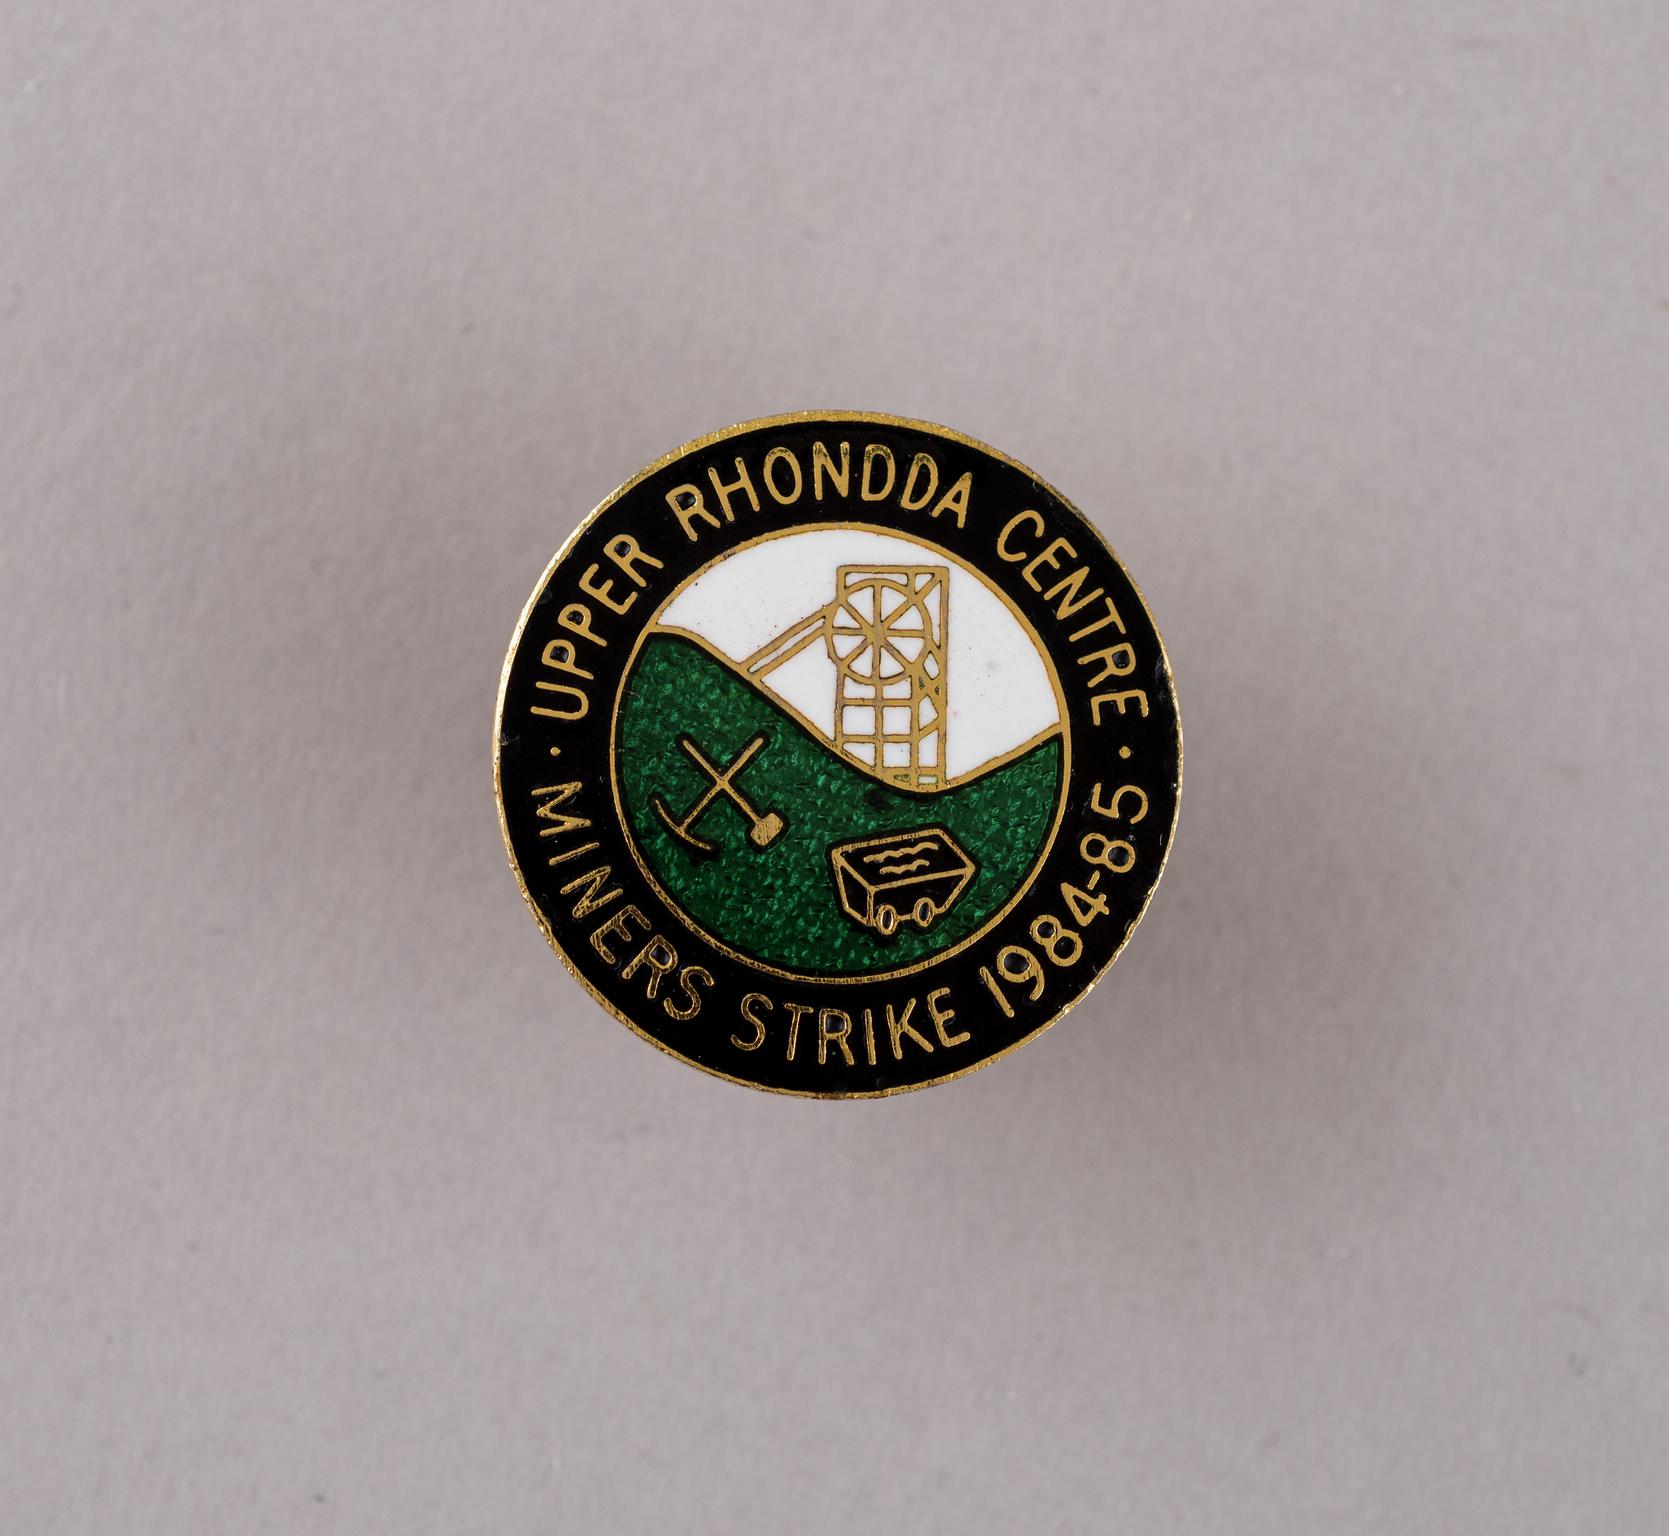 Upper Rhondda Centre Miners Strike 1984-85, badge